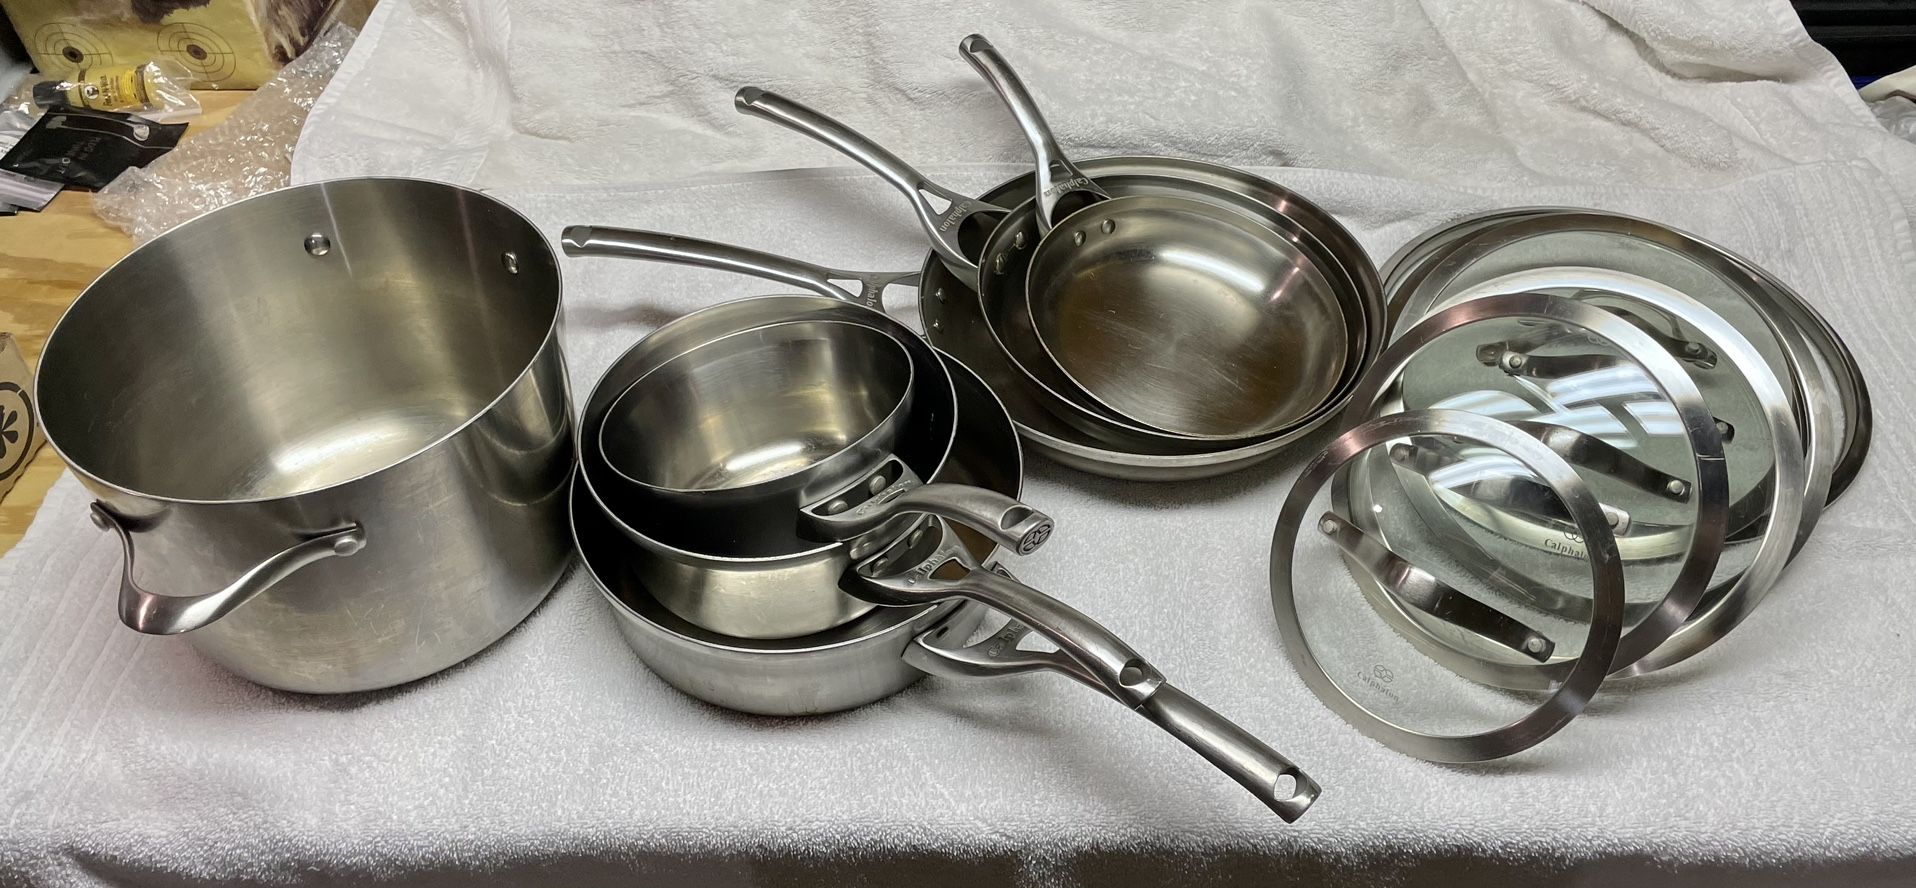 Calphalon 12pc Stainless Steel Cookware Set